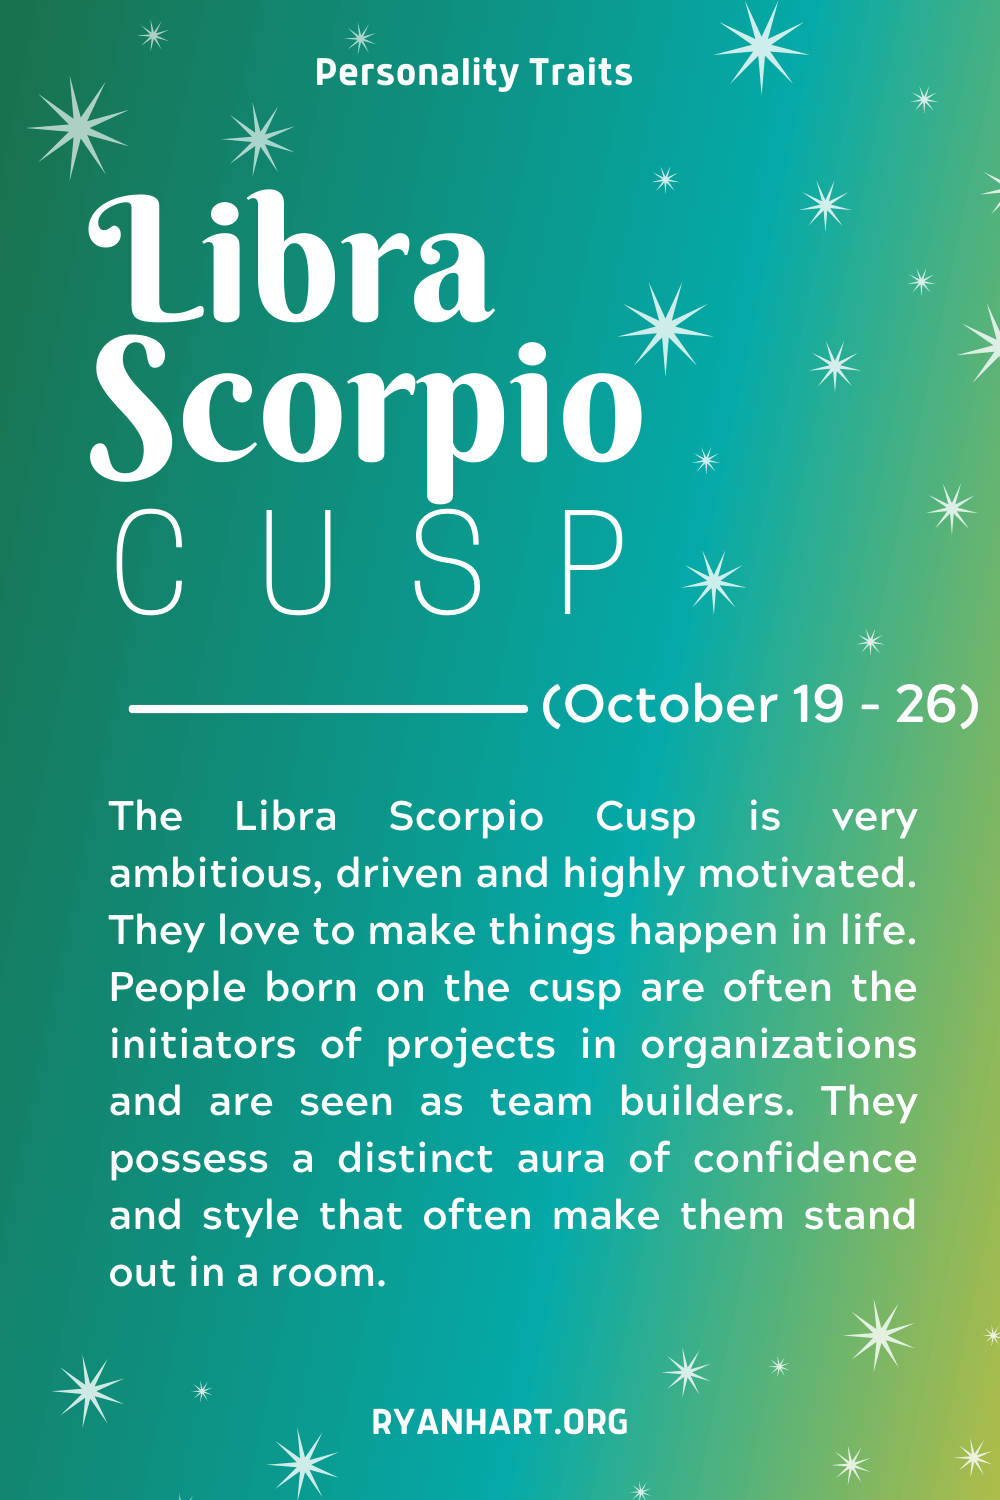 Libra Scorpio Cusp Description